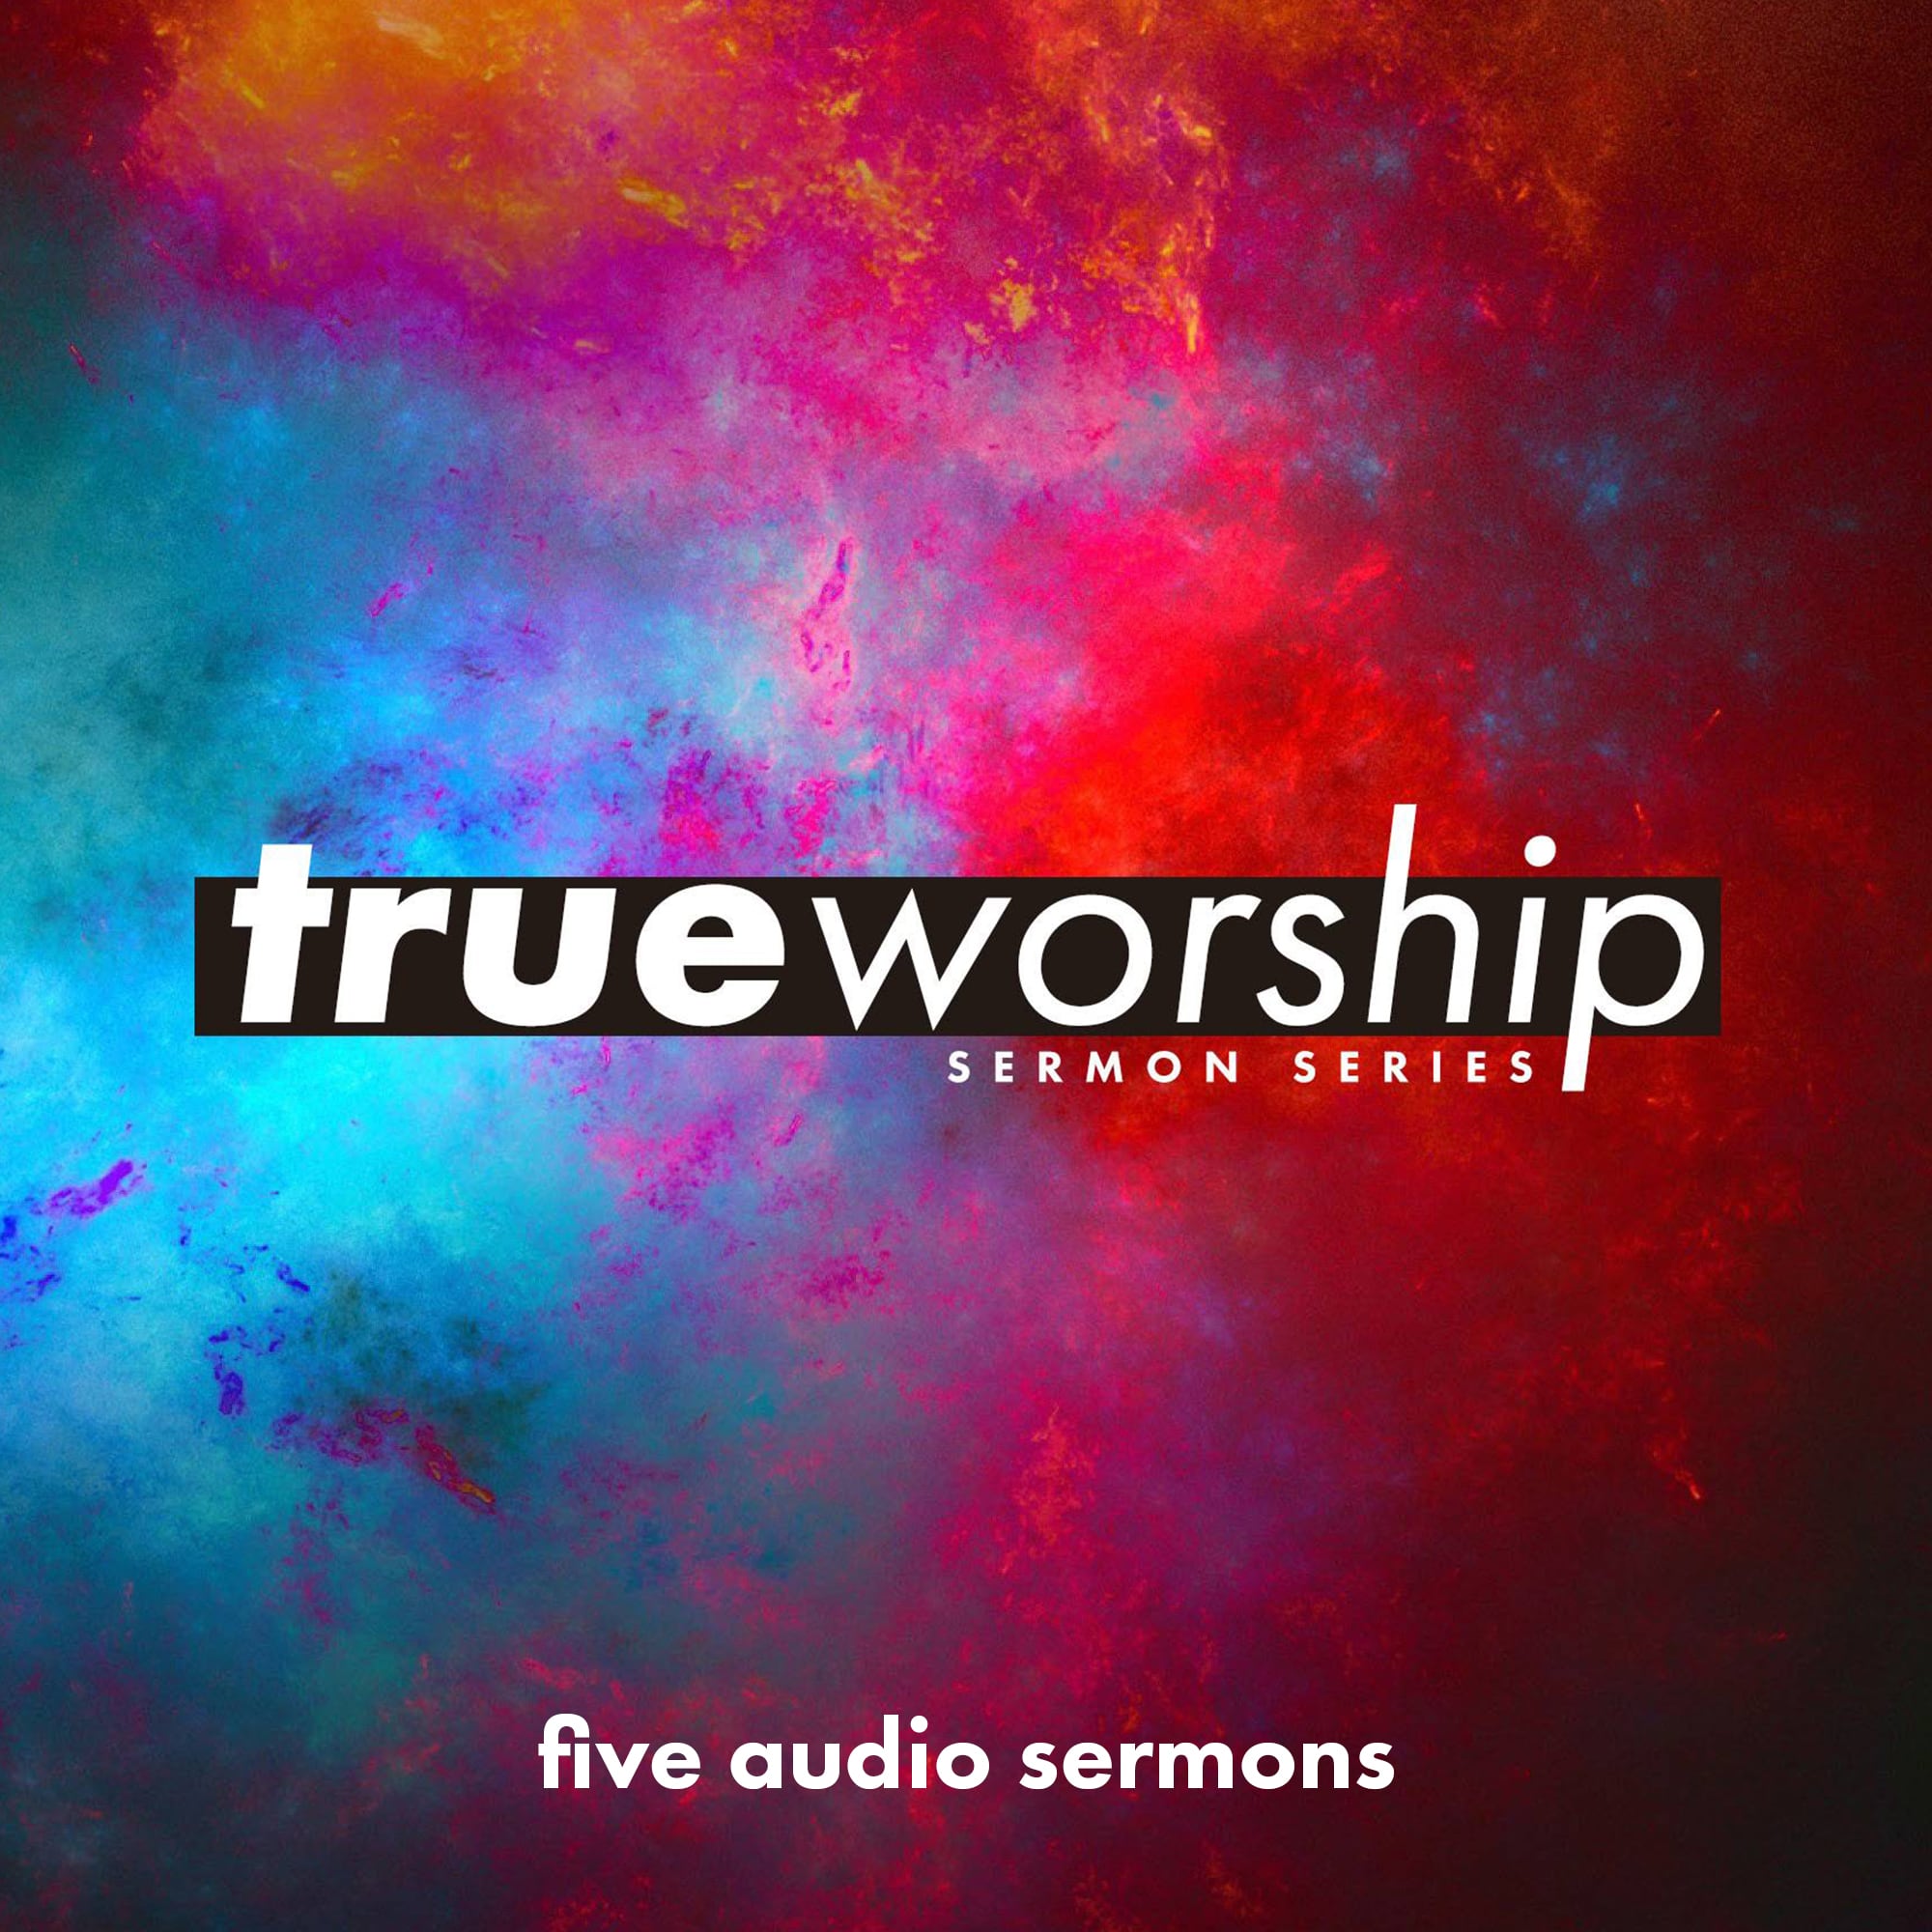 Series: True Worship